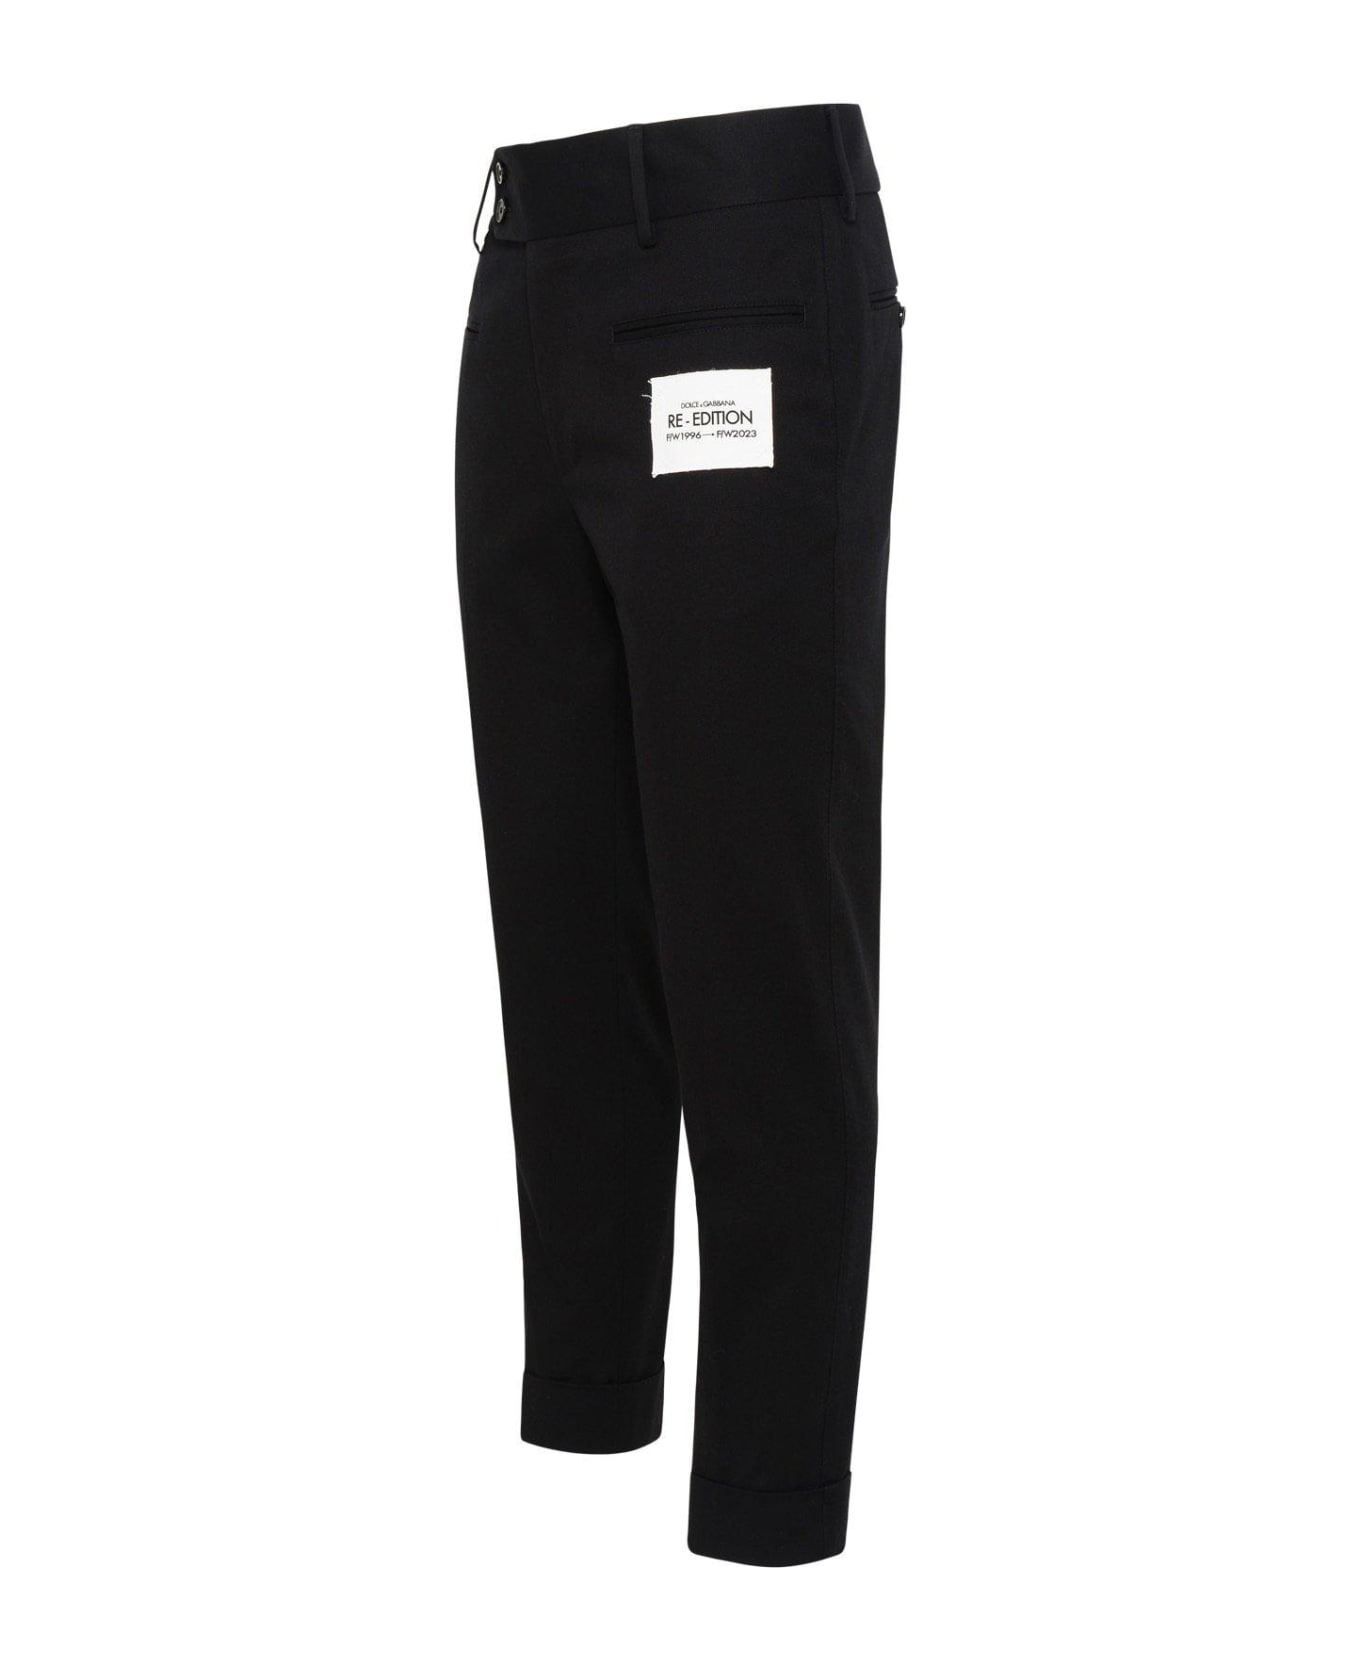 Dolce & Gabbana Stretch Drill Pants - Black